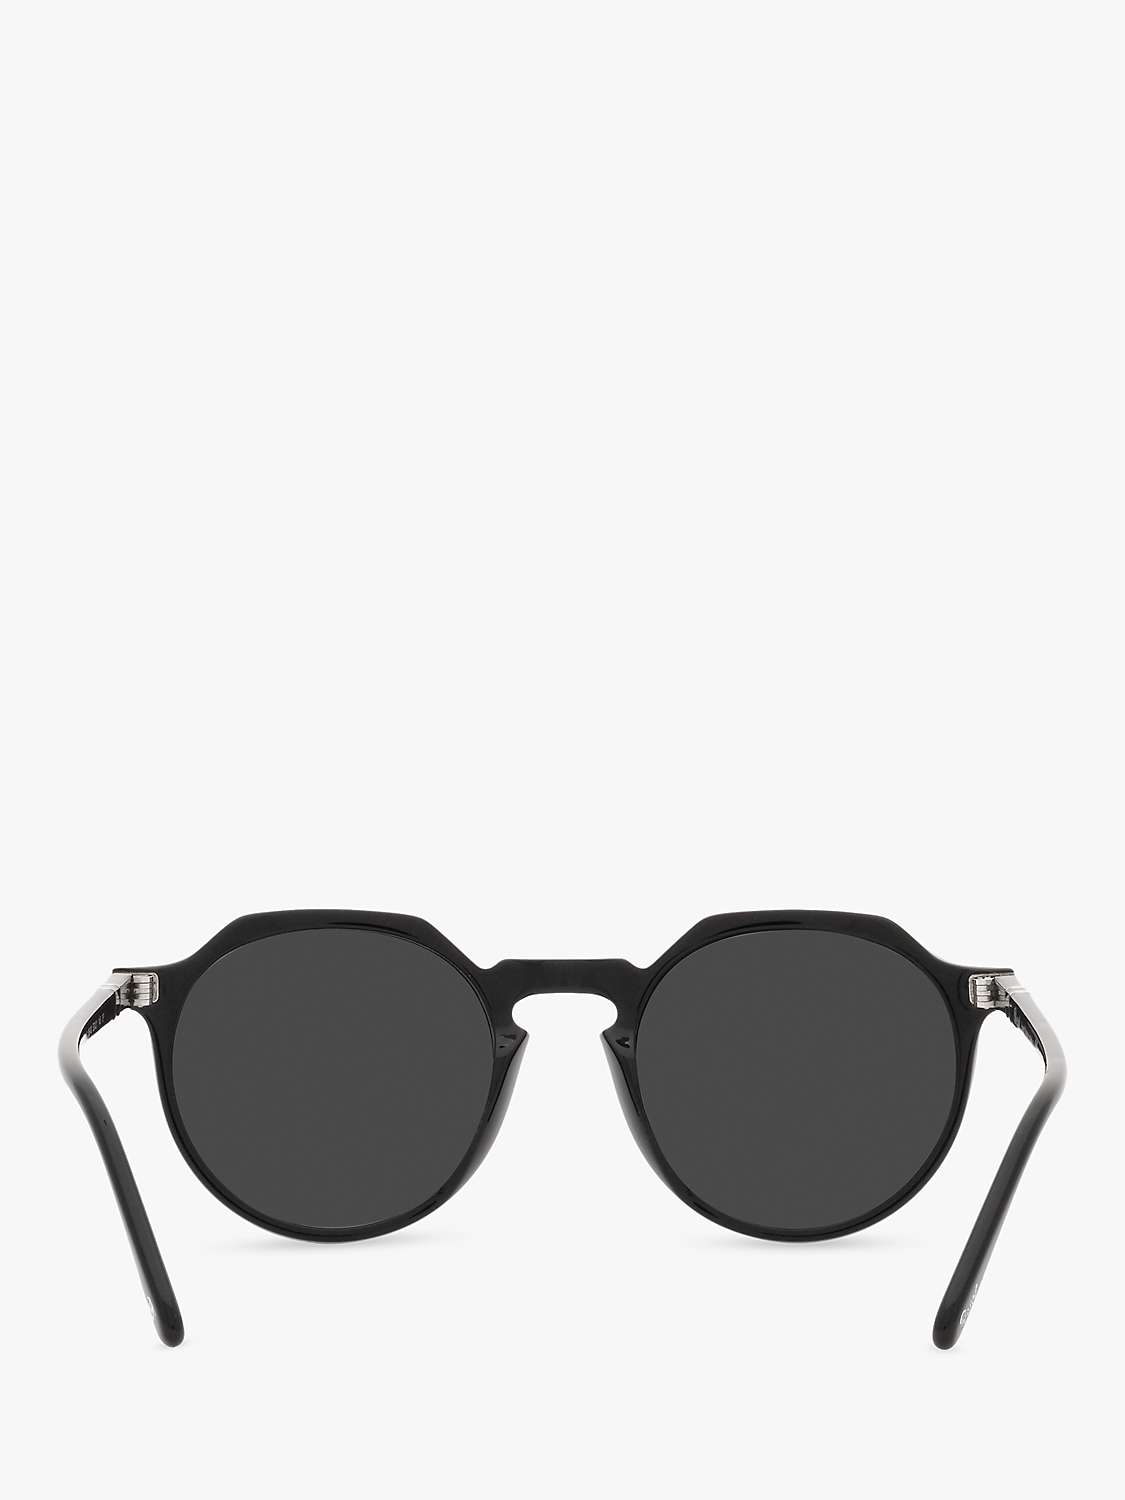 Buy Persol PO3281S Unisex Polarised Oval Sunglasses, Black/Grey Online at johnlewis.com